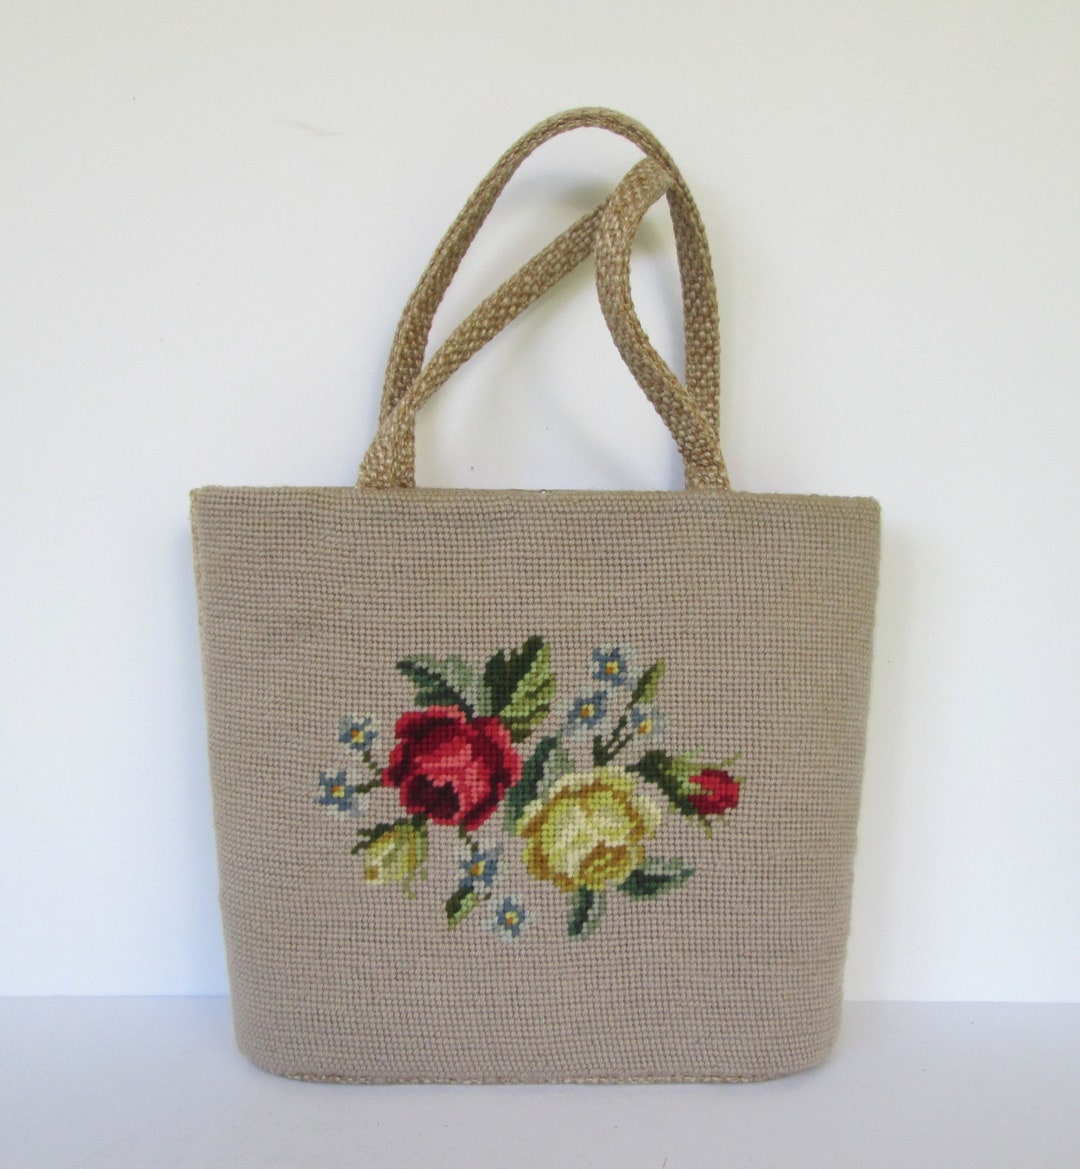 Tote Style Floral Needlepoint Handbag by JR Florida USA - Etsy